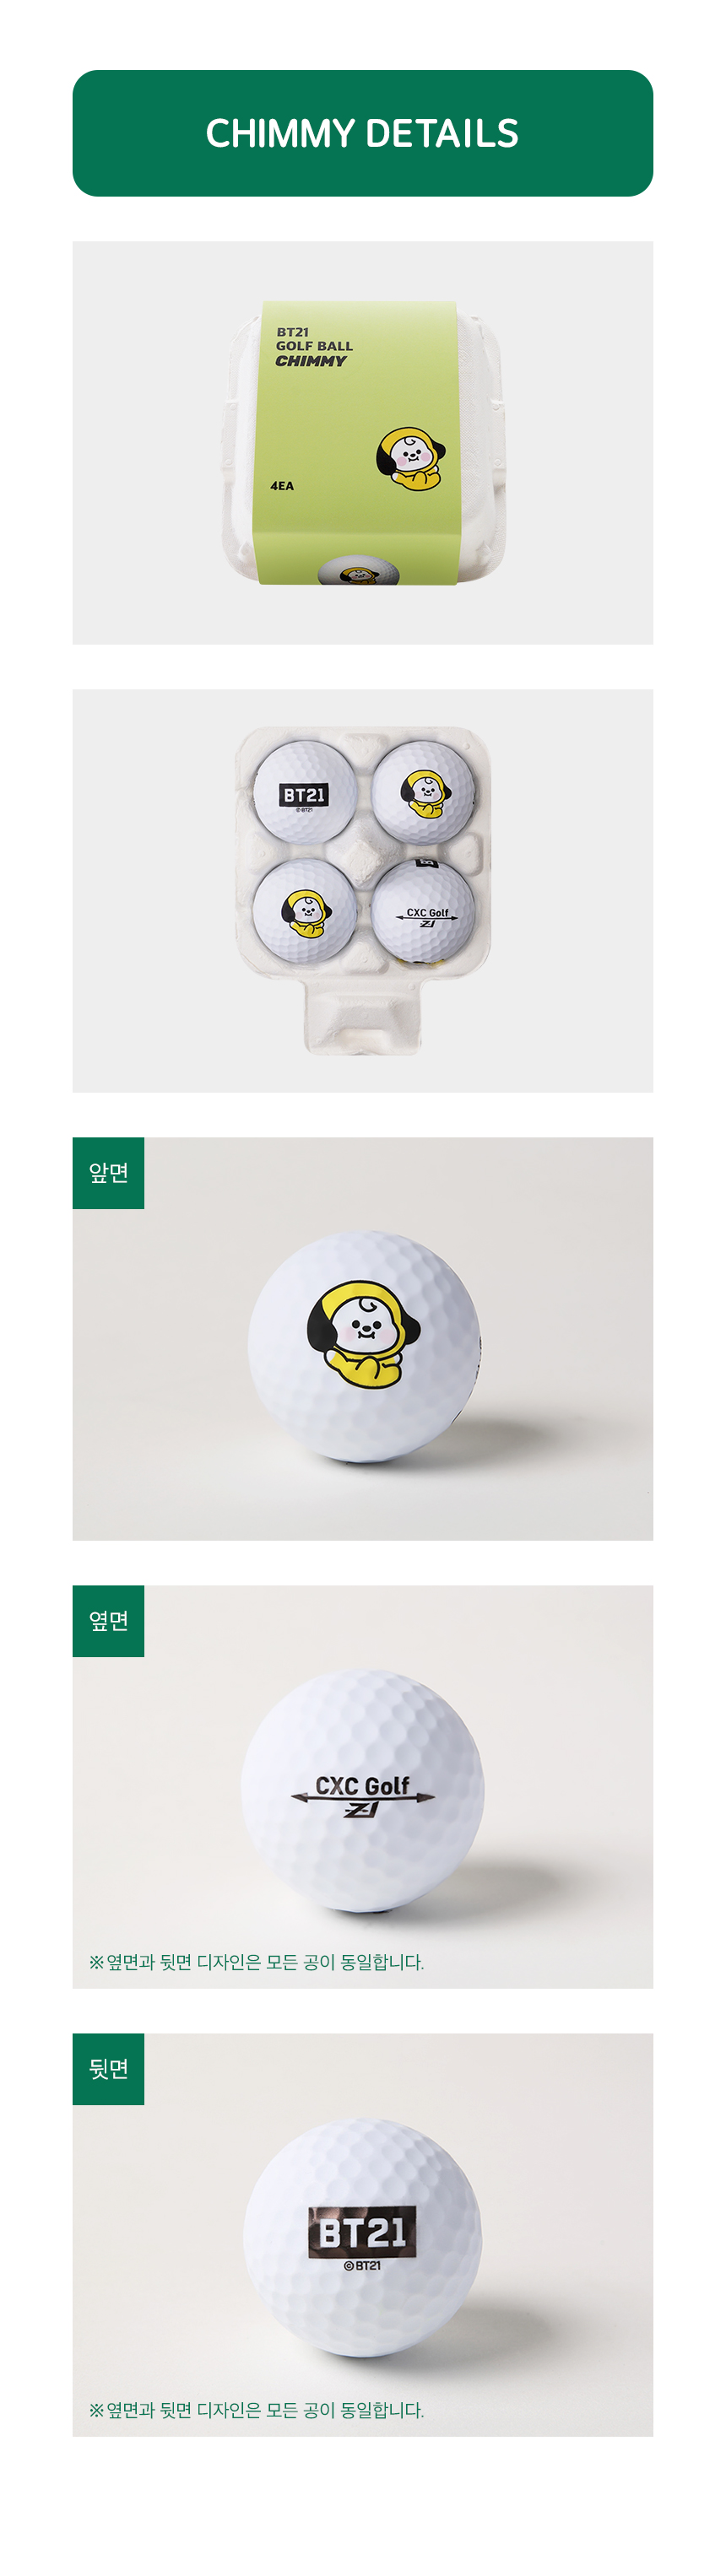 baby_golf_ball_4ea_detail_chimmy.jpg